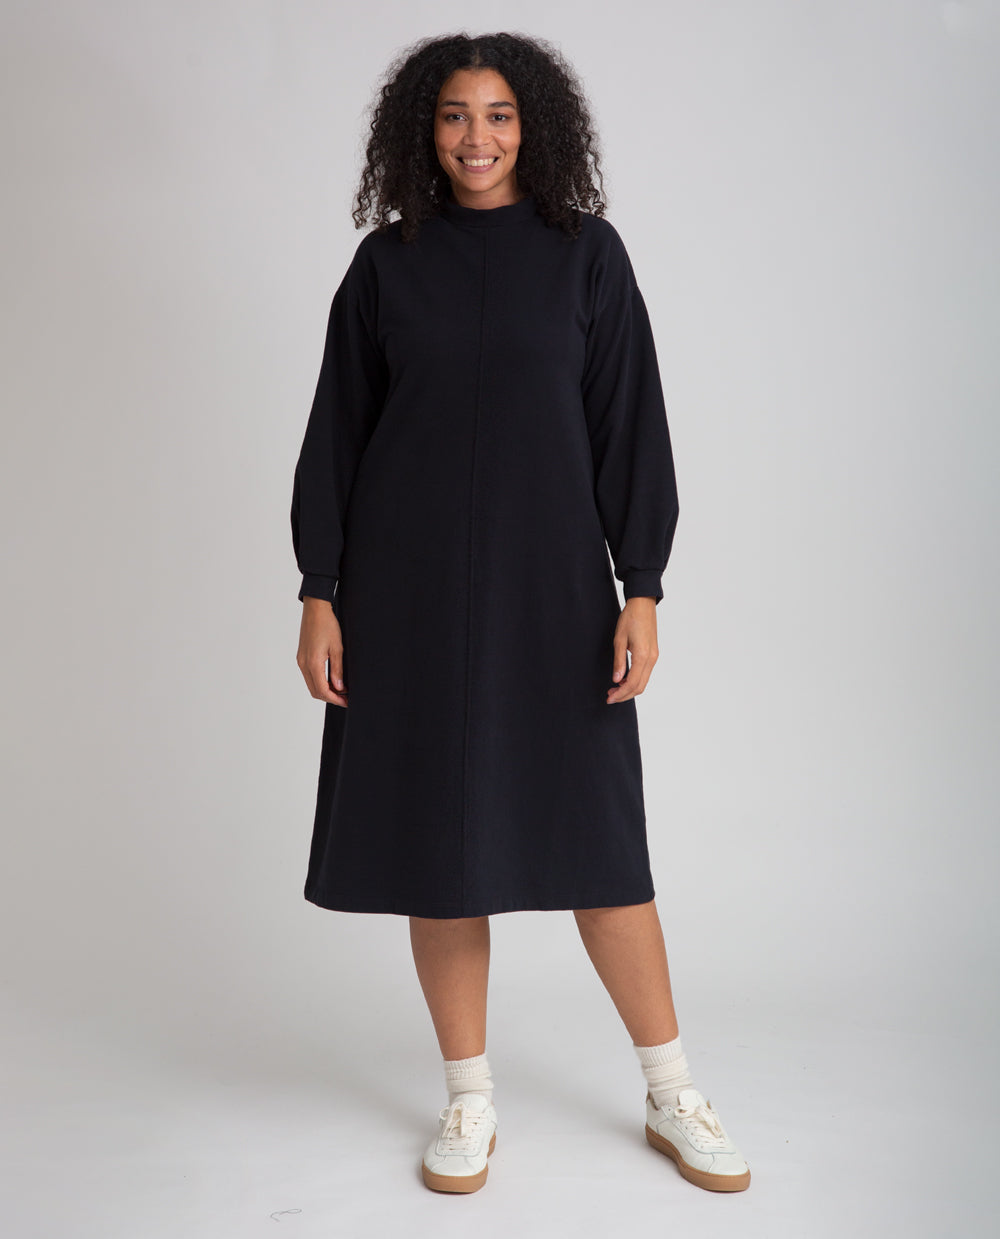 Mavis Organic Cotton Dress in Black XS